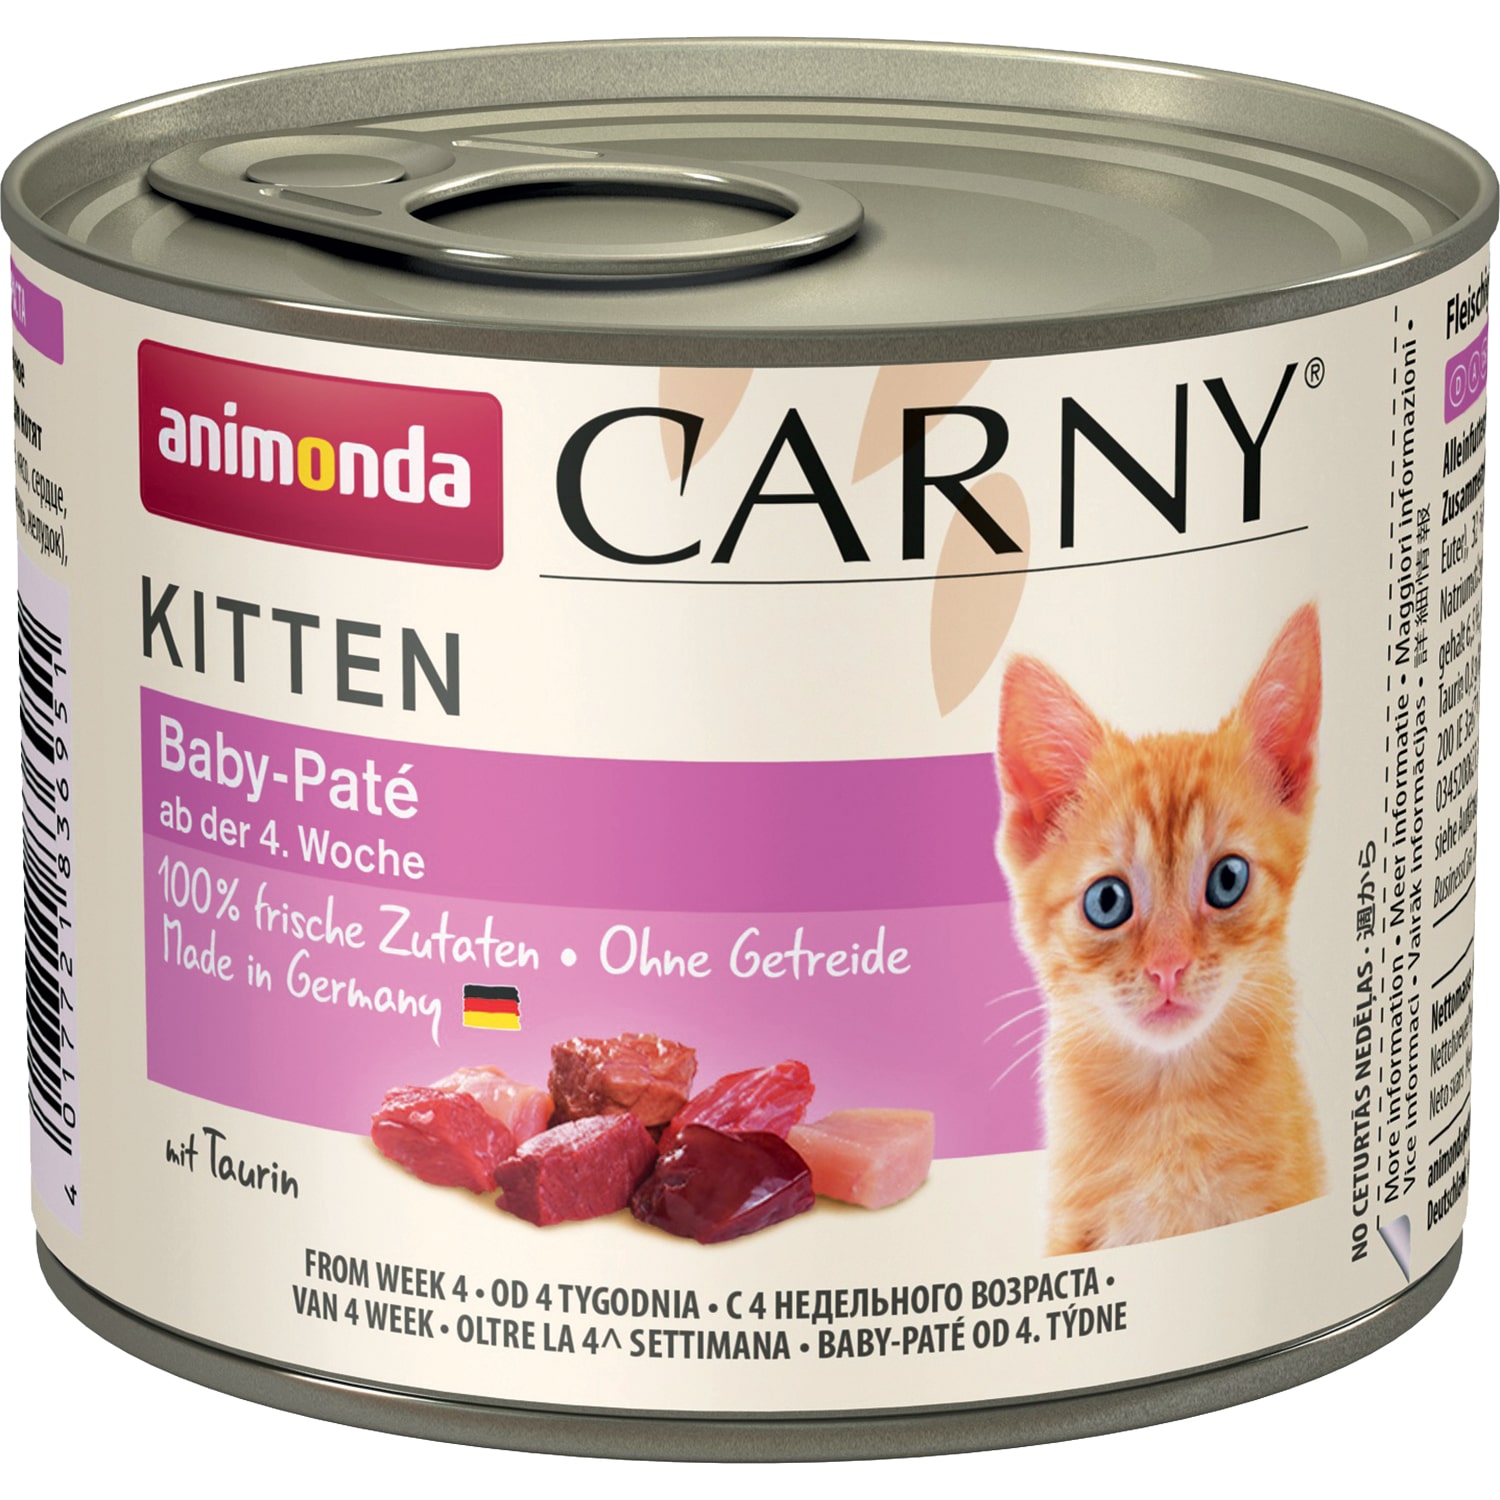 Carny Kitten Baby-Pate корм для котят старше 1 месяца, Animonda от зоомагазина Дино Зоо